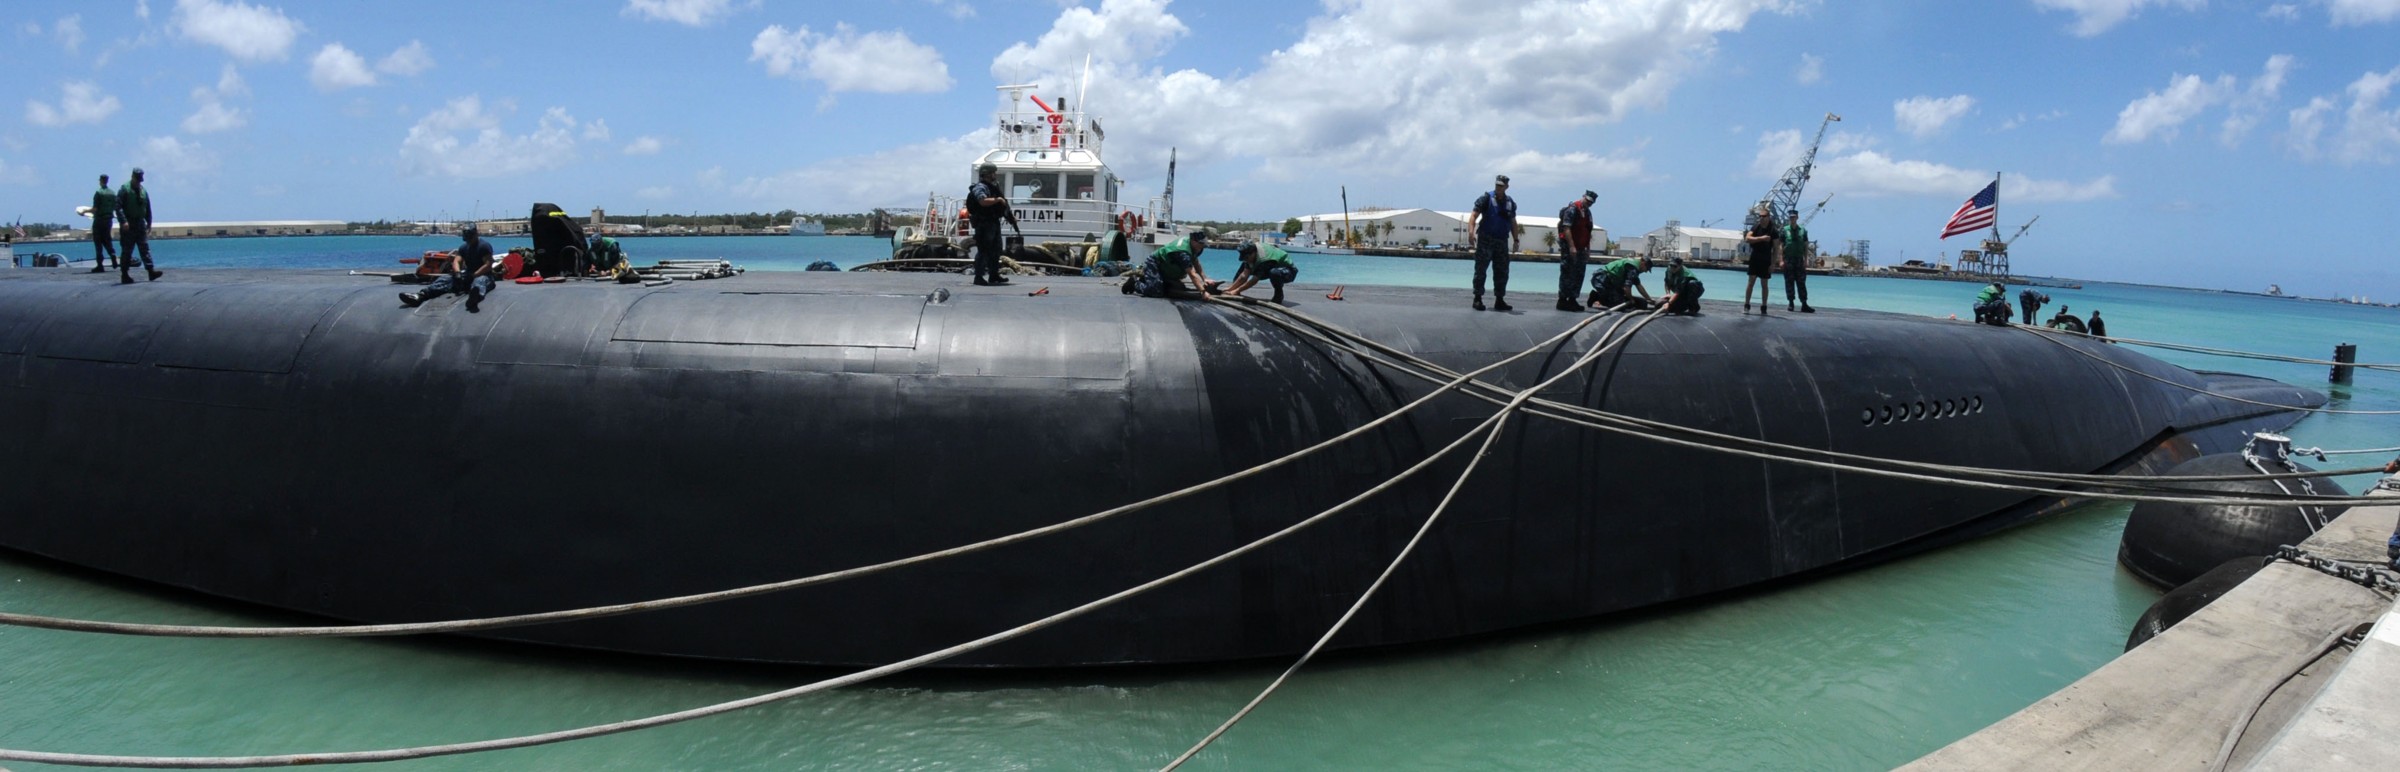 ssgn-726 uss ohio guided missile submarine us navy 2013 24 polaris point guam